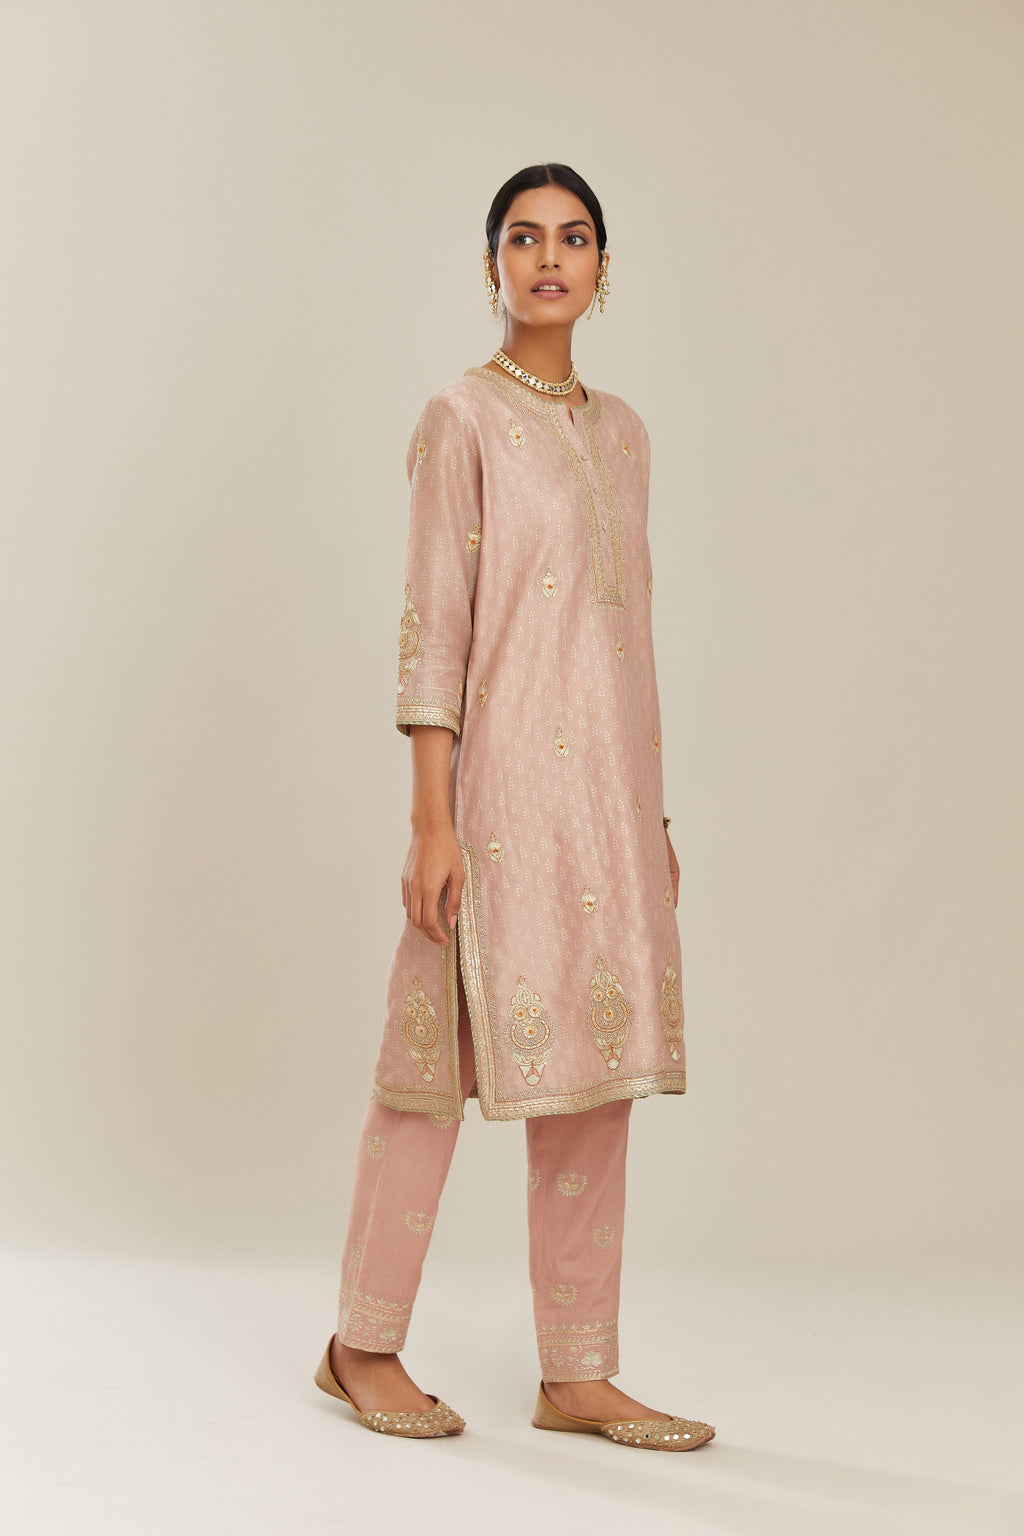 Old rose hand block printed silk chanderi short kurta set, highlighted with gold gota and zari embroidery.